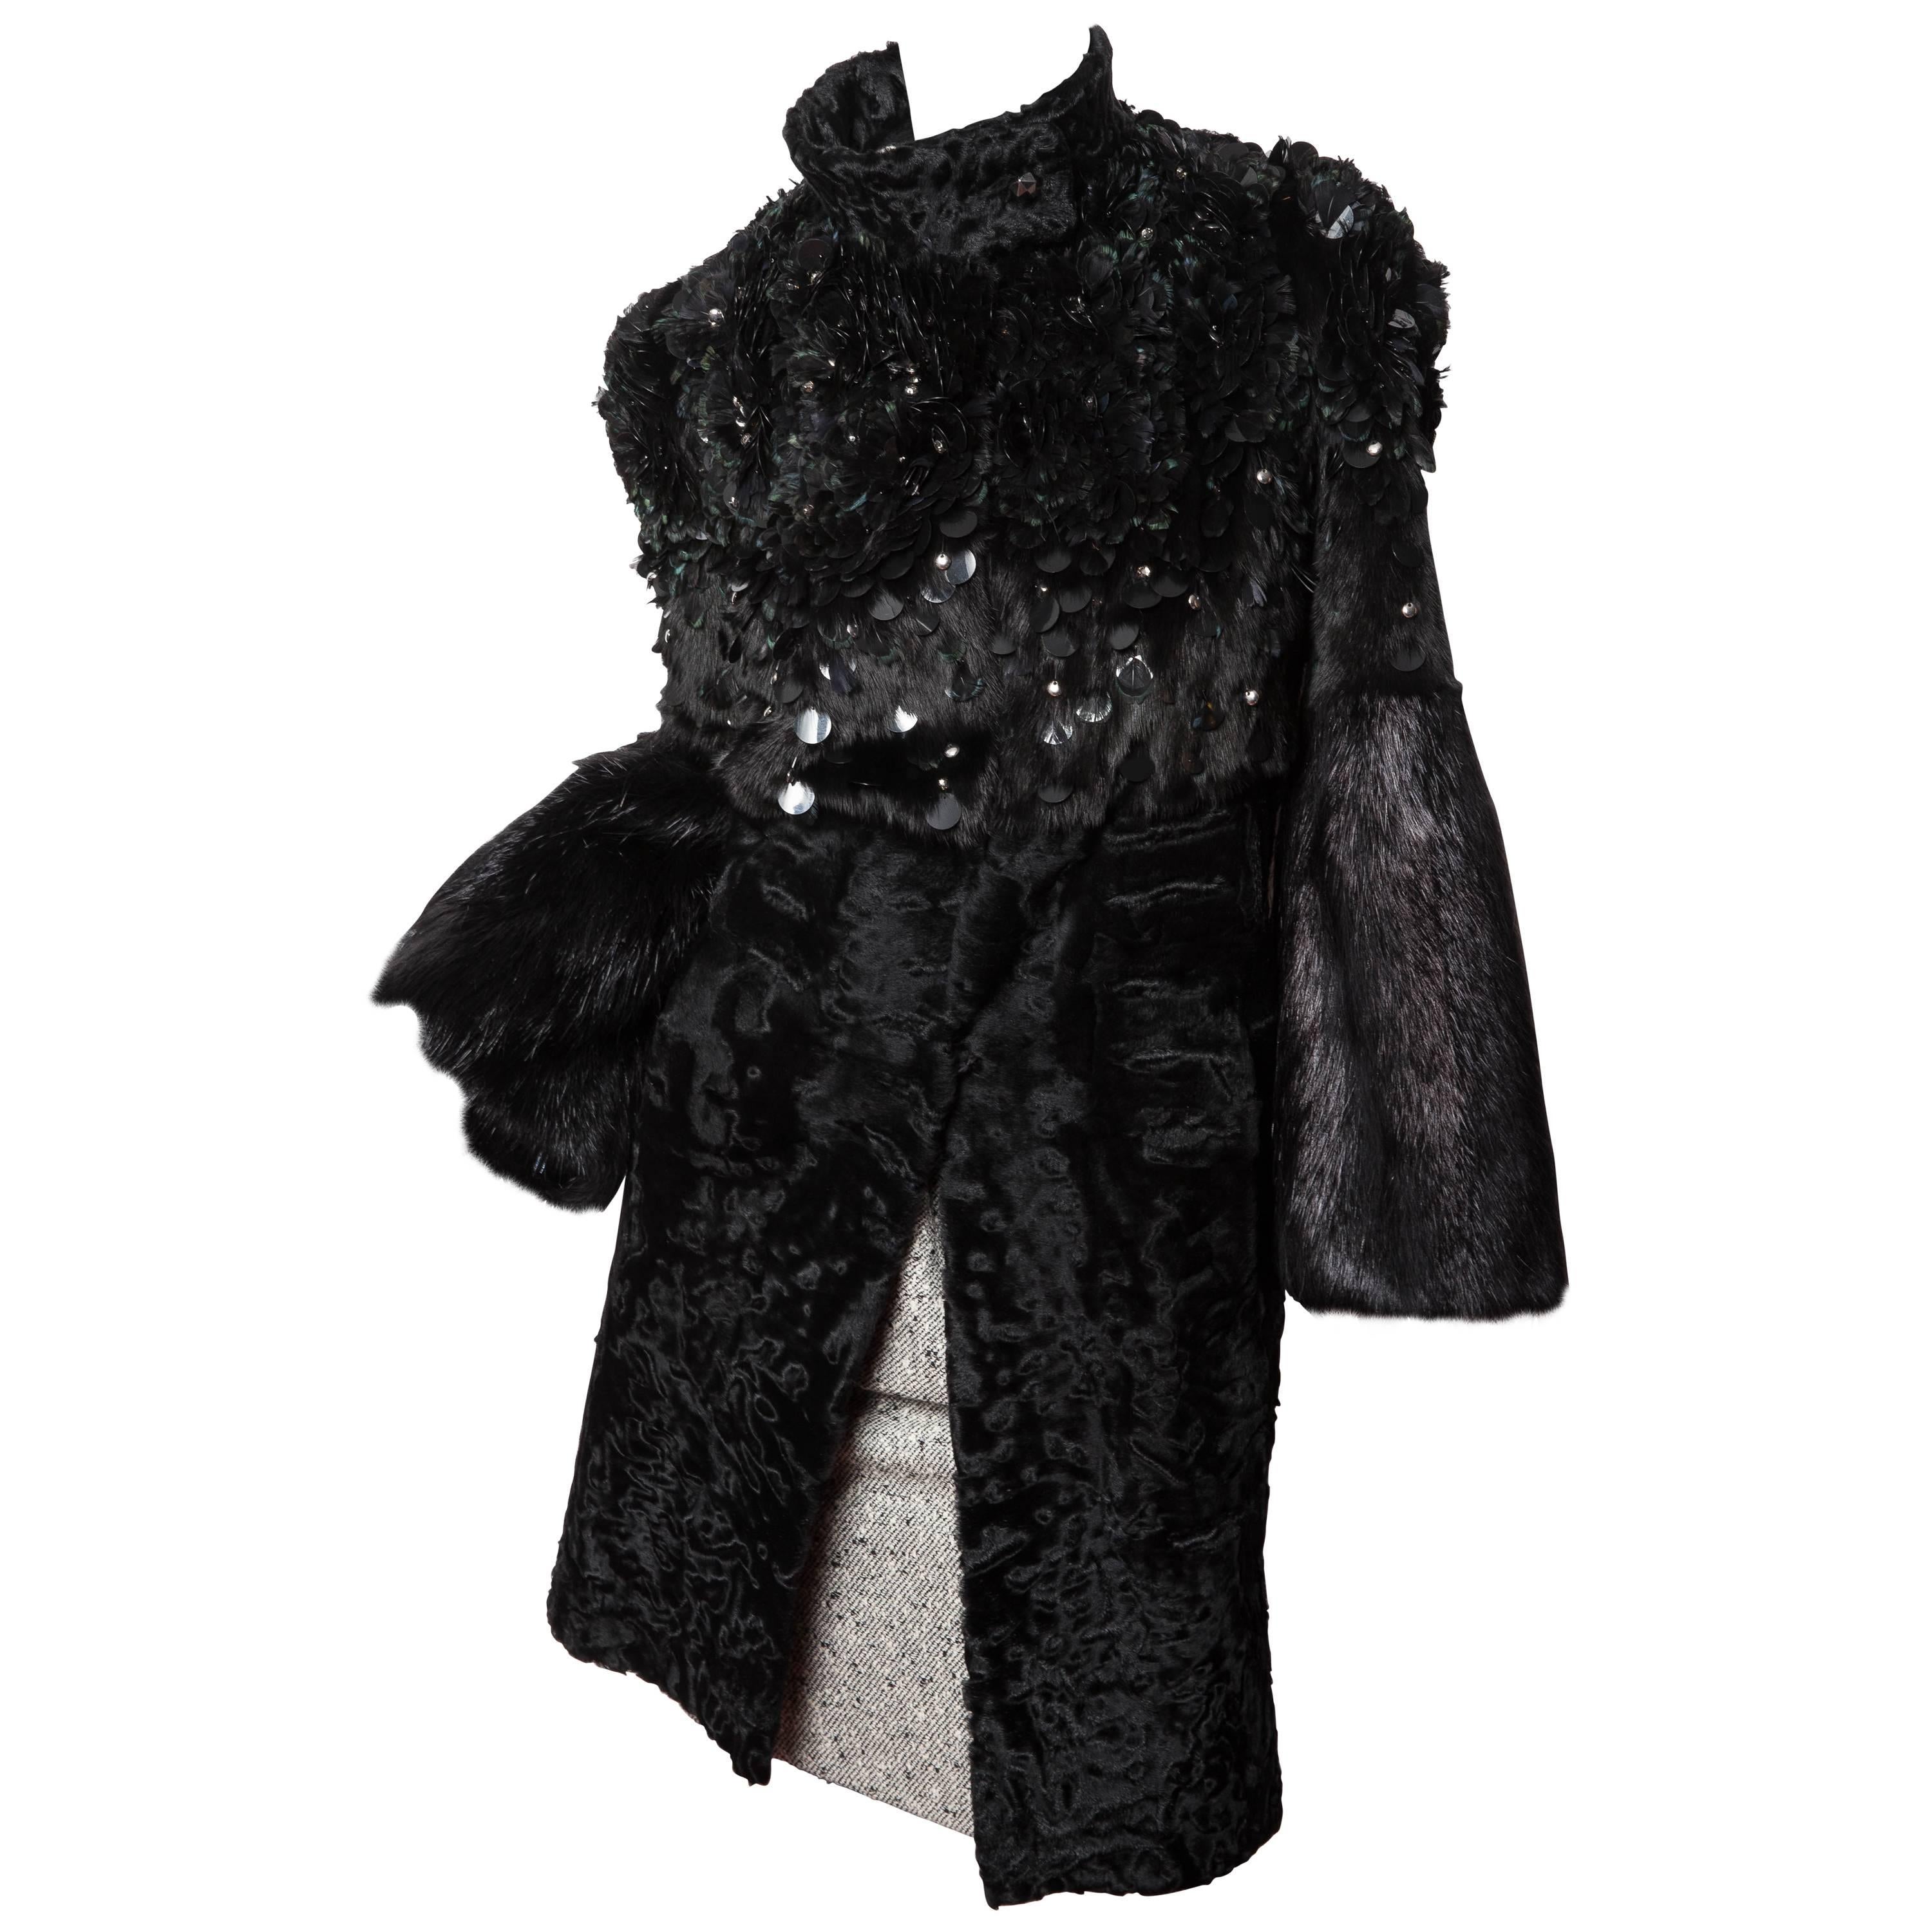 Gucci Runway Mink and Persian Lamb Coat w/ Paillettes and Crystals - Size 4 / 6